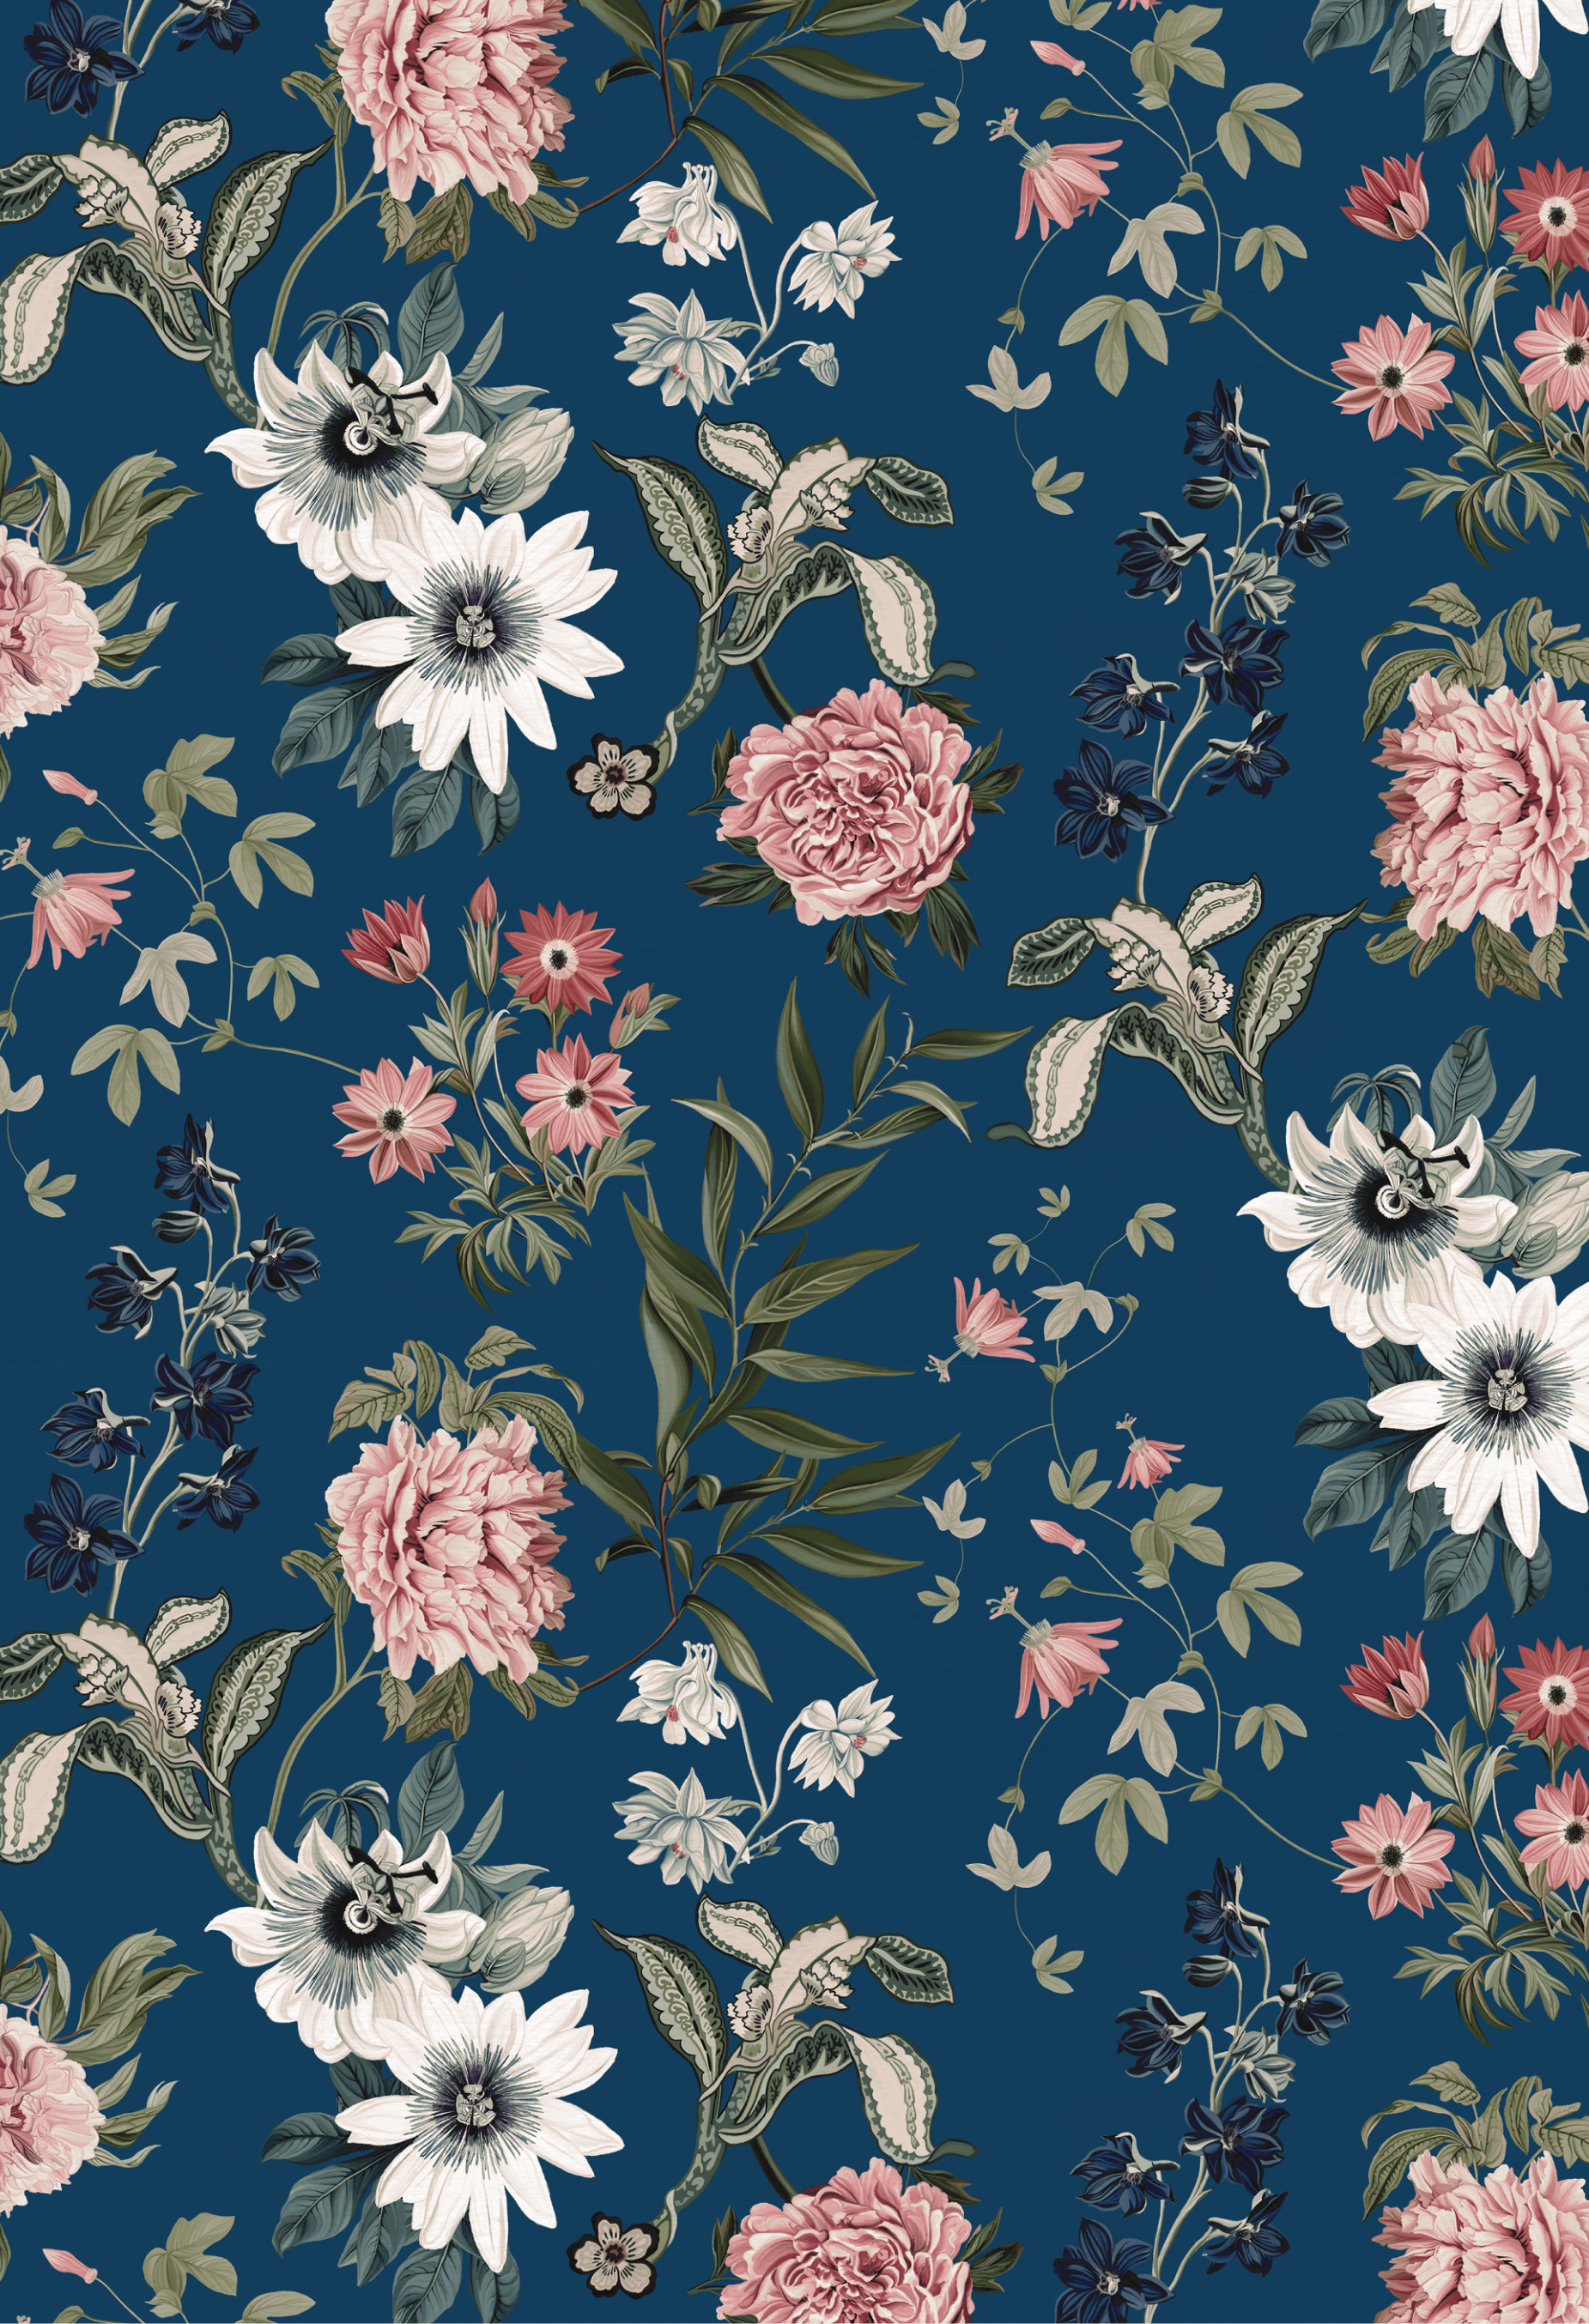 Floral Patterned blue botanical Wallpaper by Deus ex Gardenia of Beechcroft Garden Wallpaper in Azure.